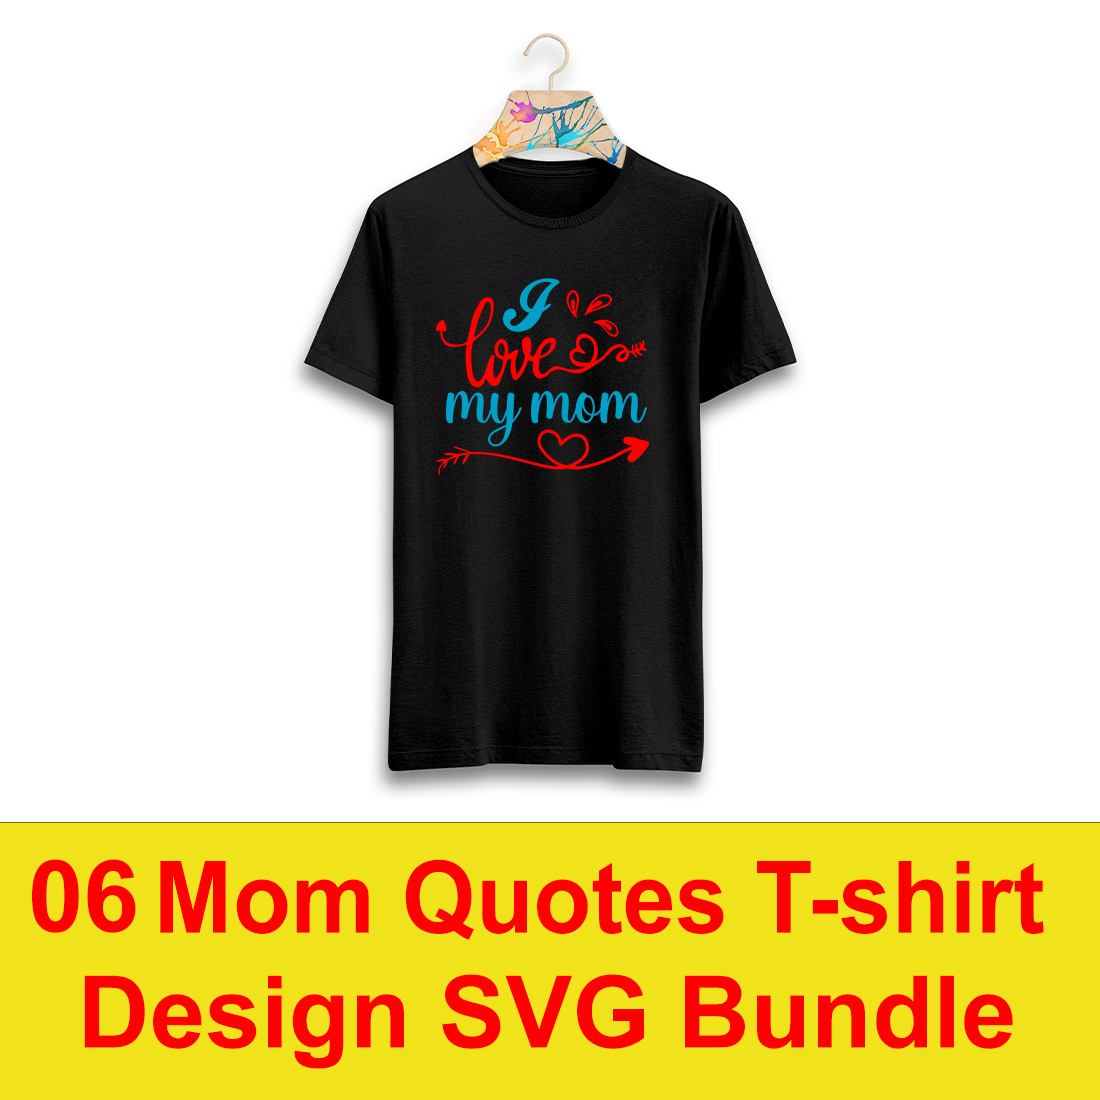 06 Mom Quotes T-shirt Design SVG Bundle preview image.